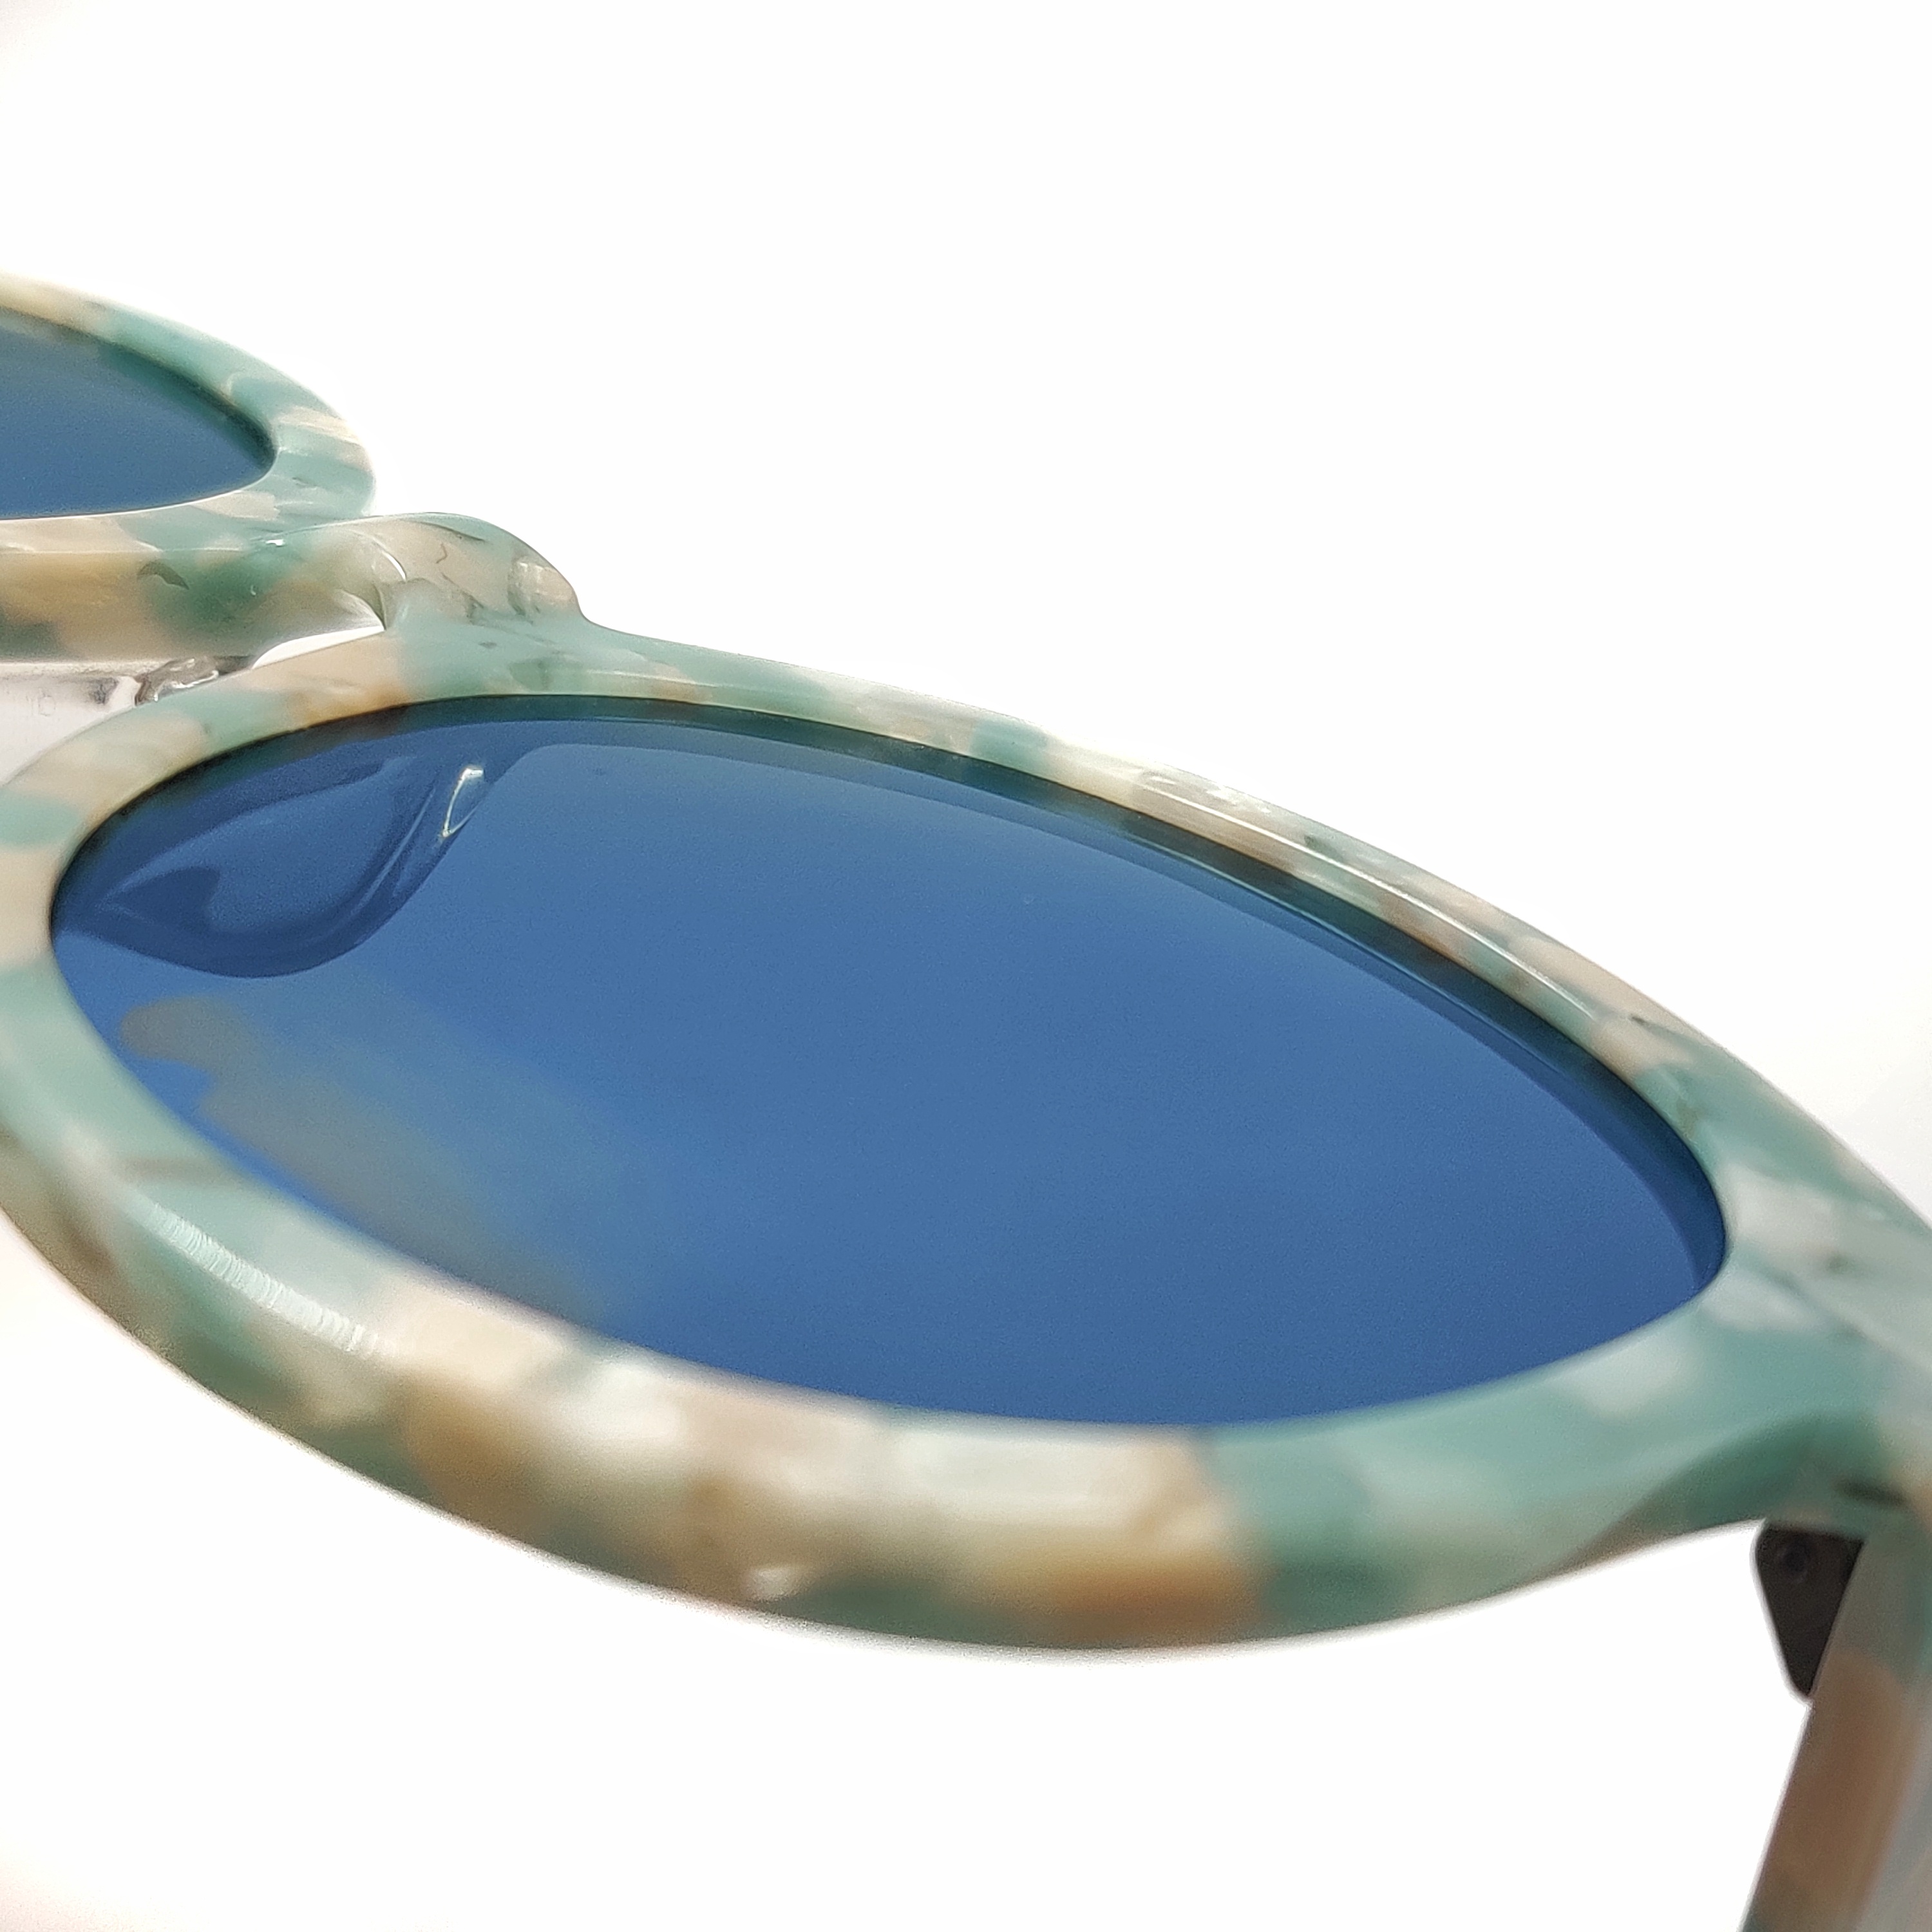 Gafas de sol de mujer Tonos Fábrica de gafas de sol de China Eyeglass Outlet